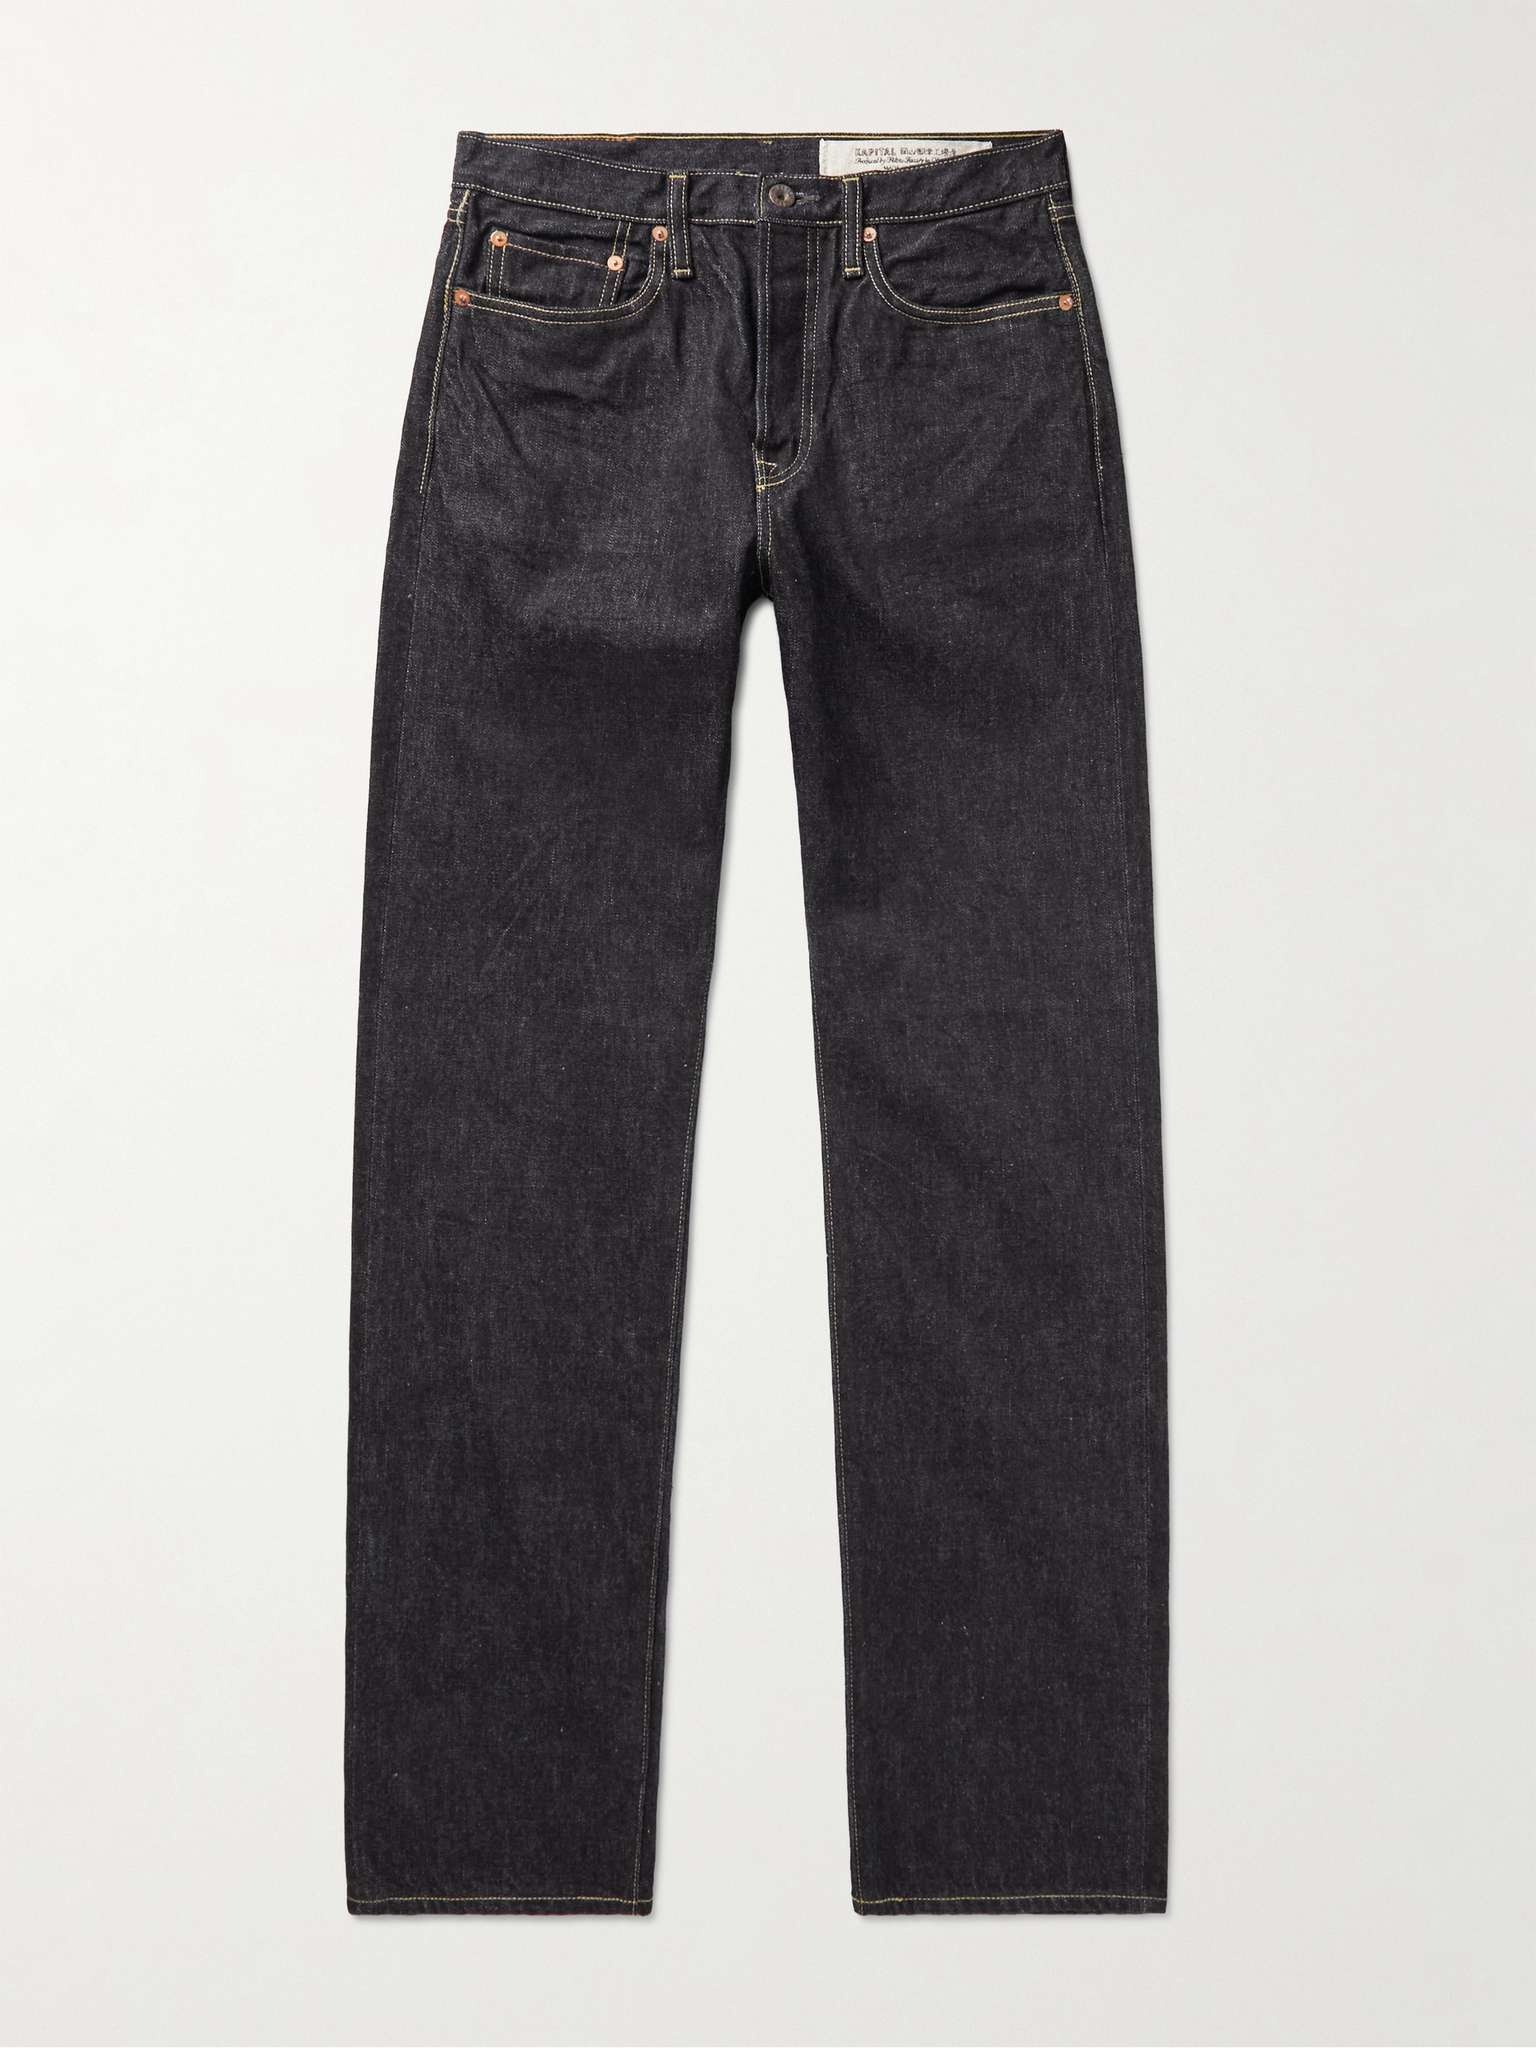 Monkey CISCO Slim-Fit Jeans - 1